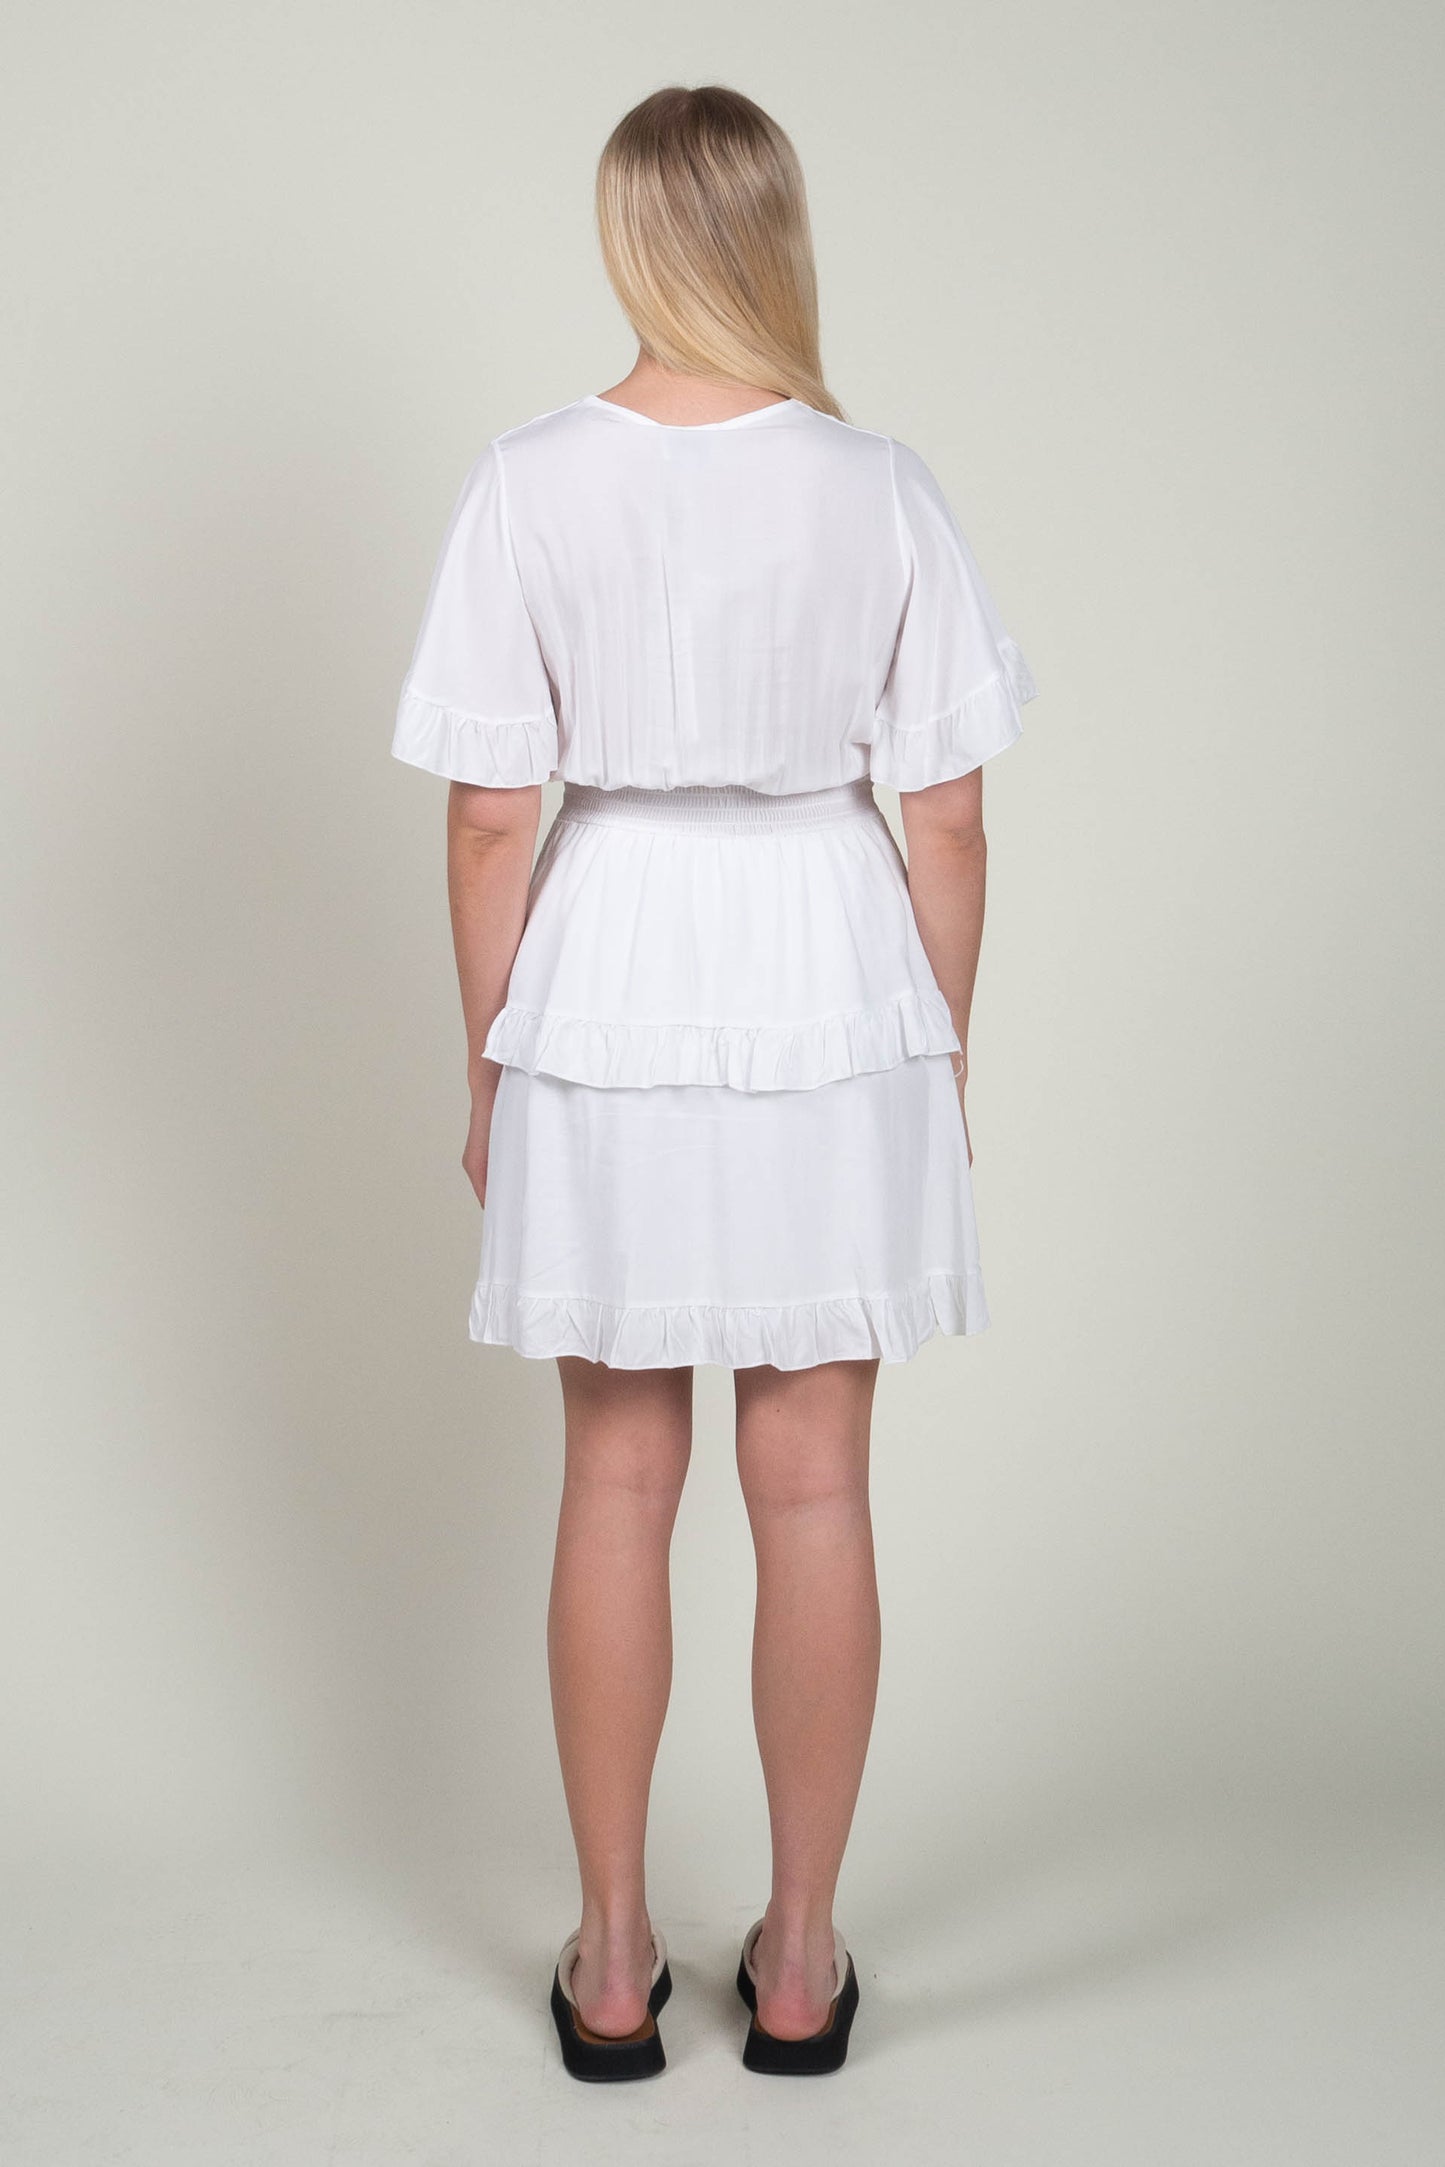 Americandreams Ella Short Dress solid - white